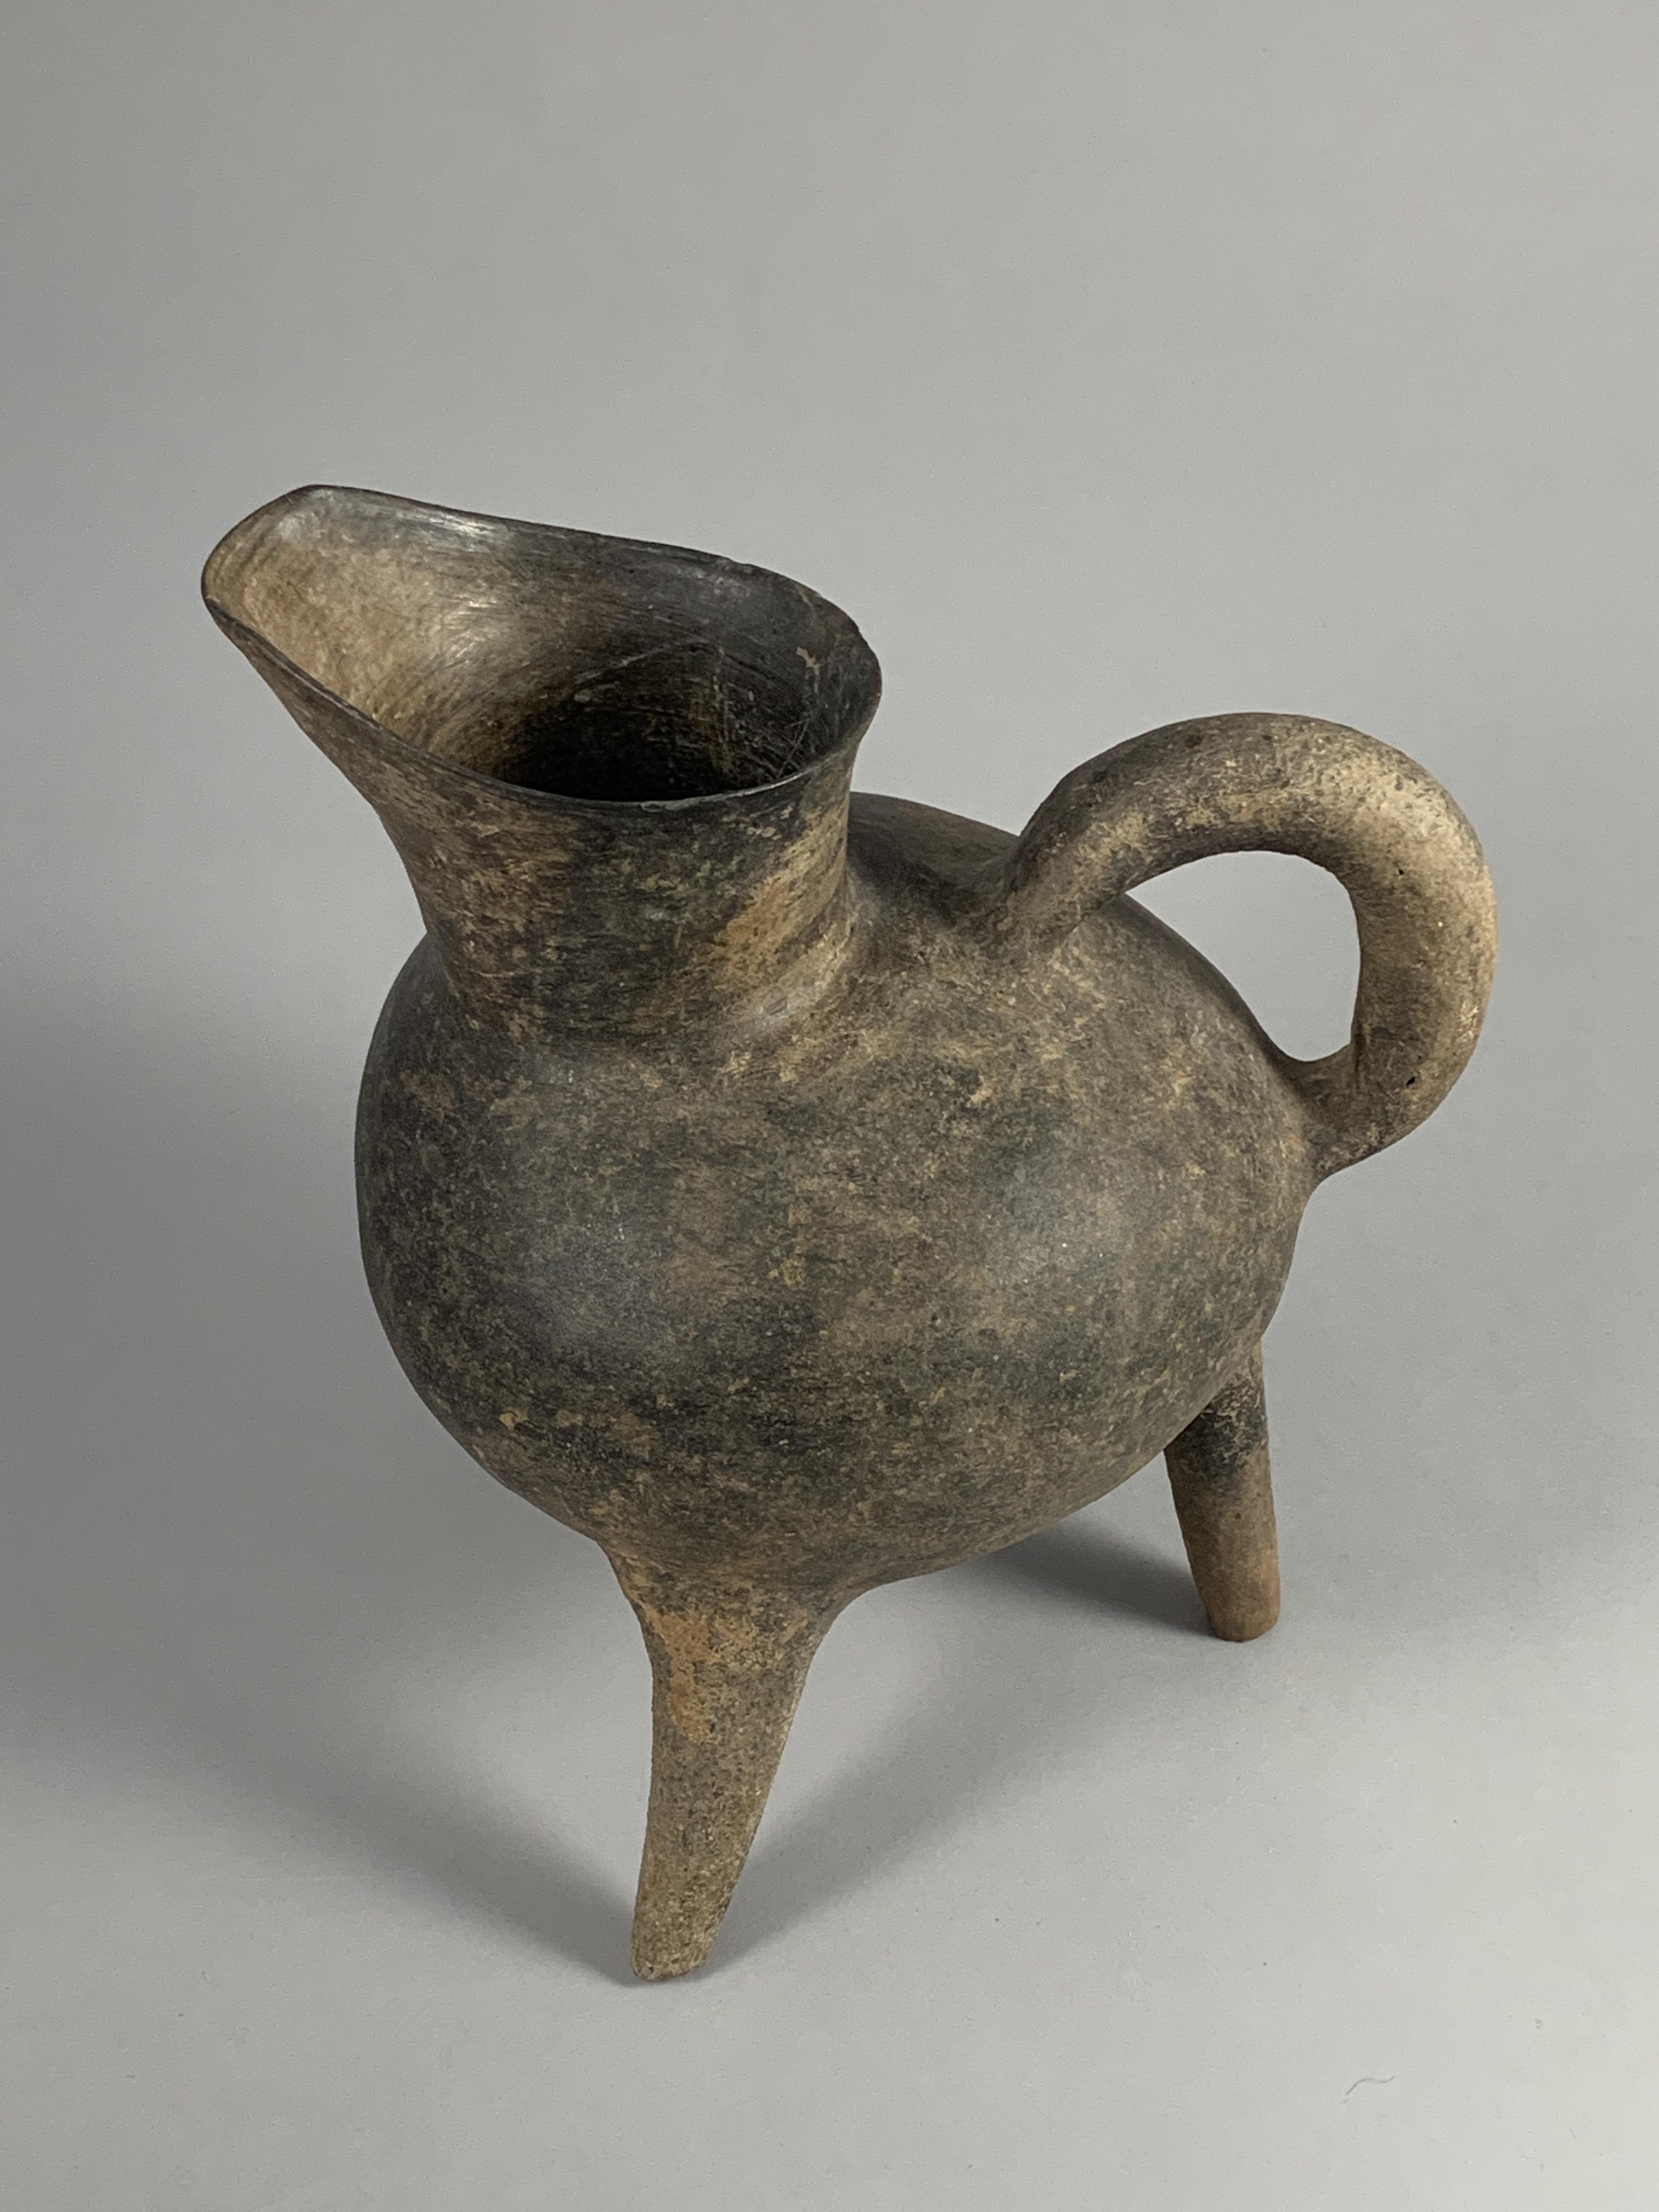 A Tripod Pottery Vessel, Liangzhu Culture (3300-2200 Bc) - Image 14 of 15